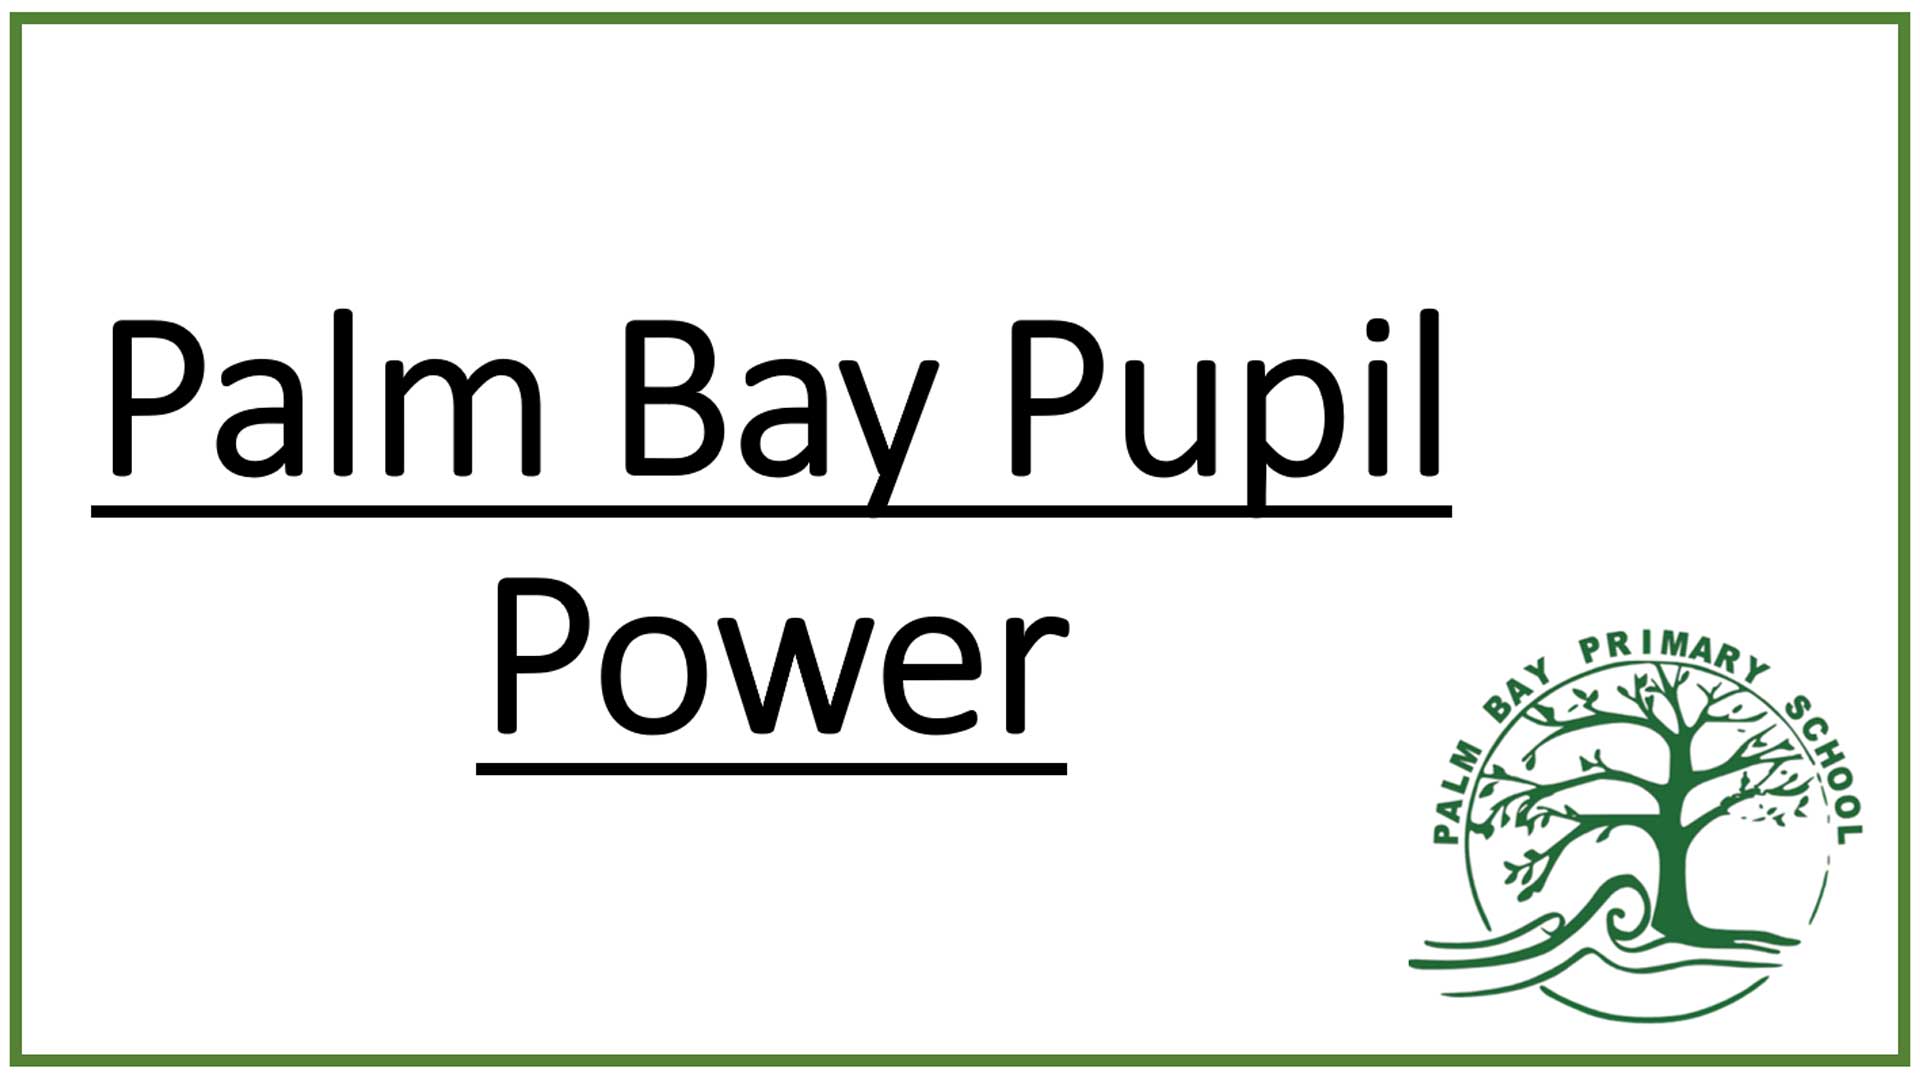 Palm Bay Pupil Power